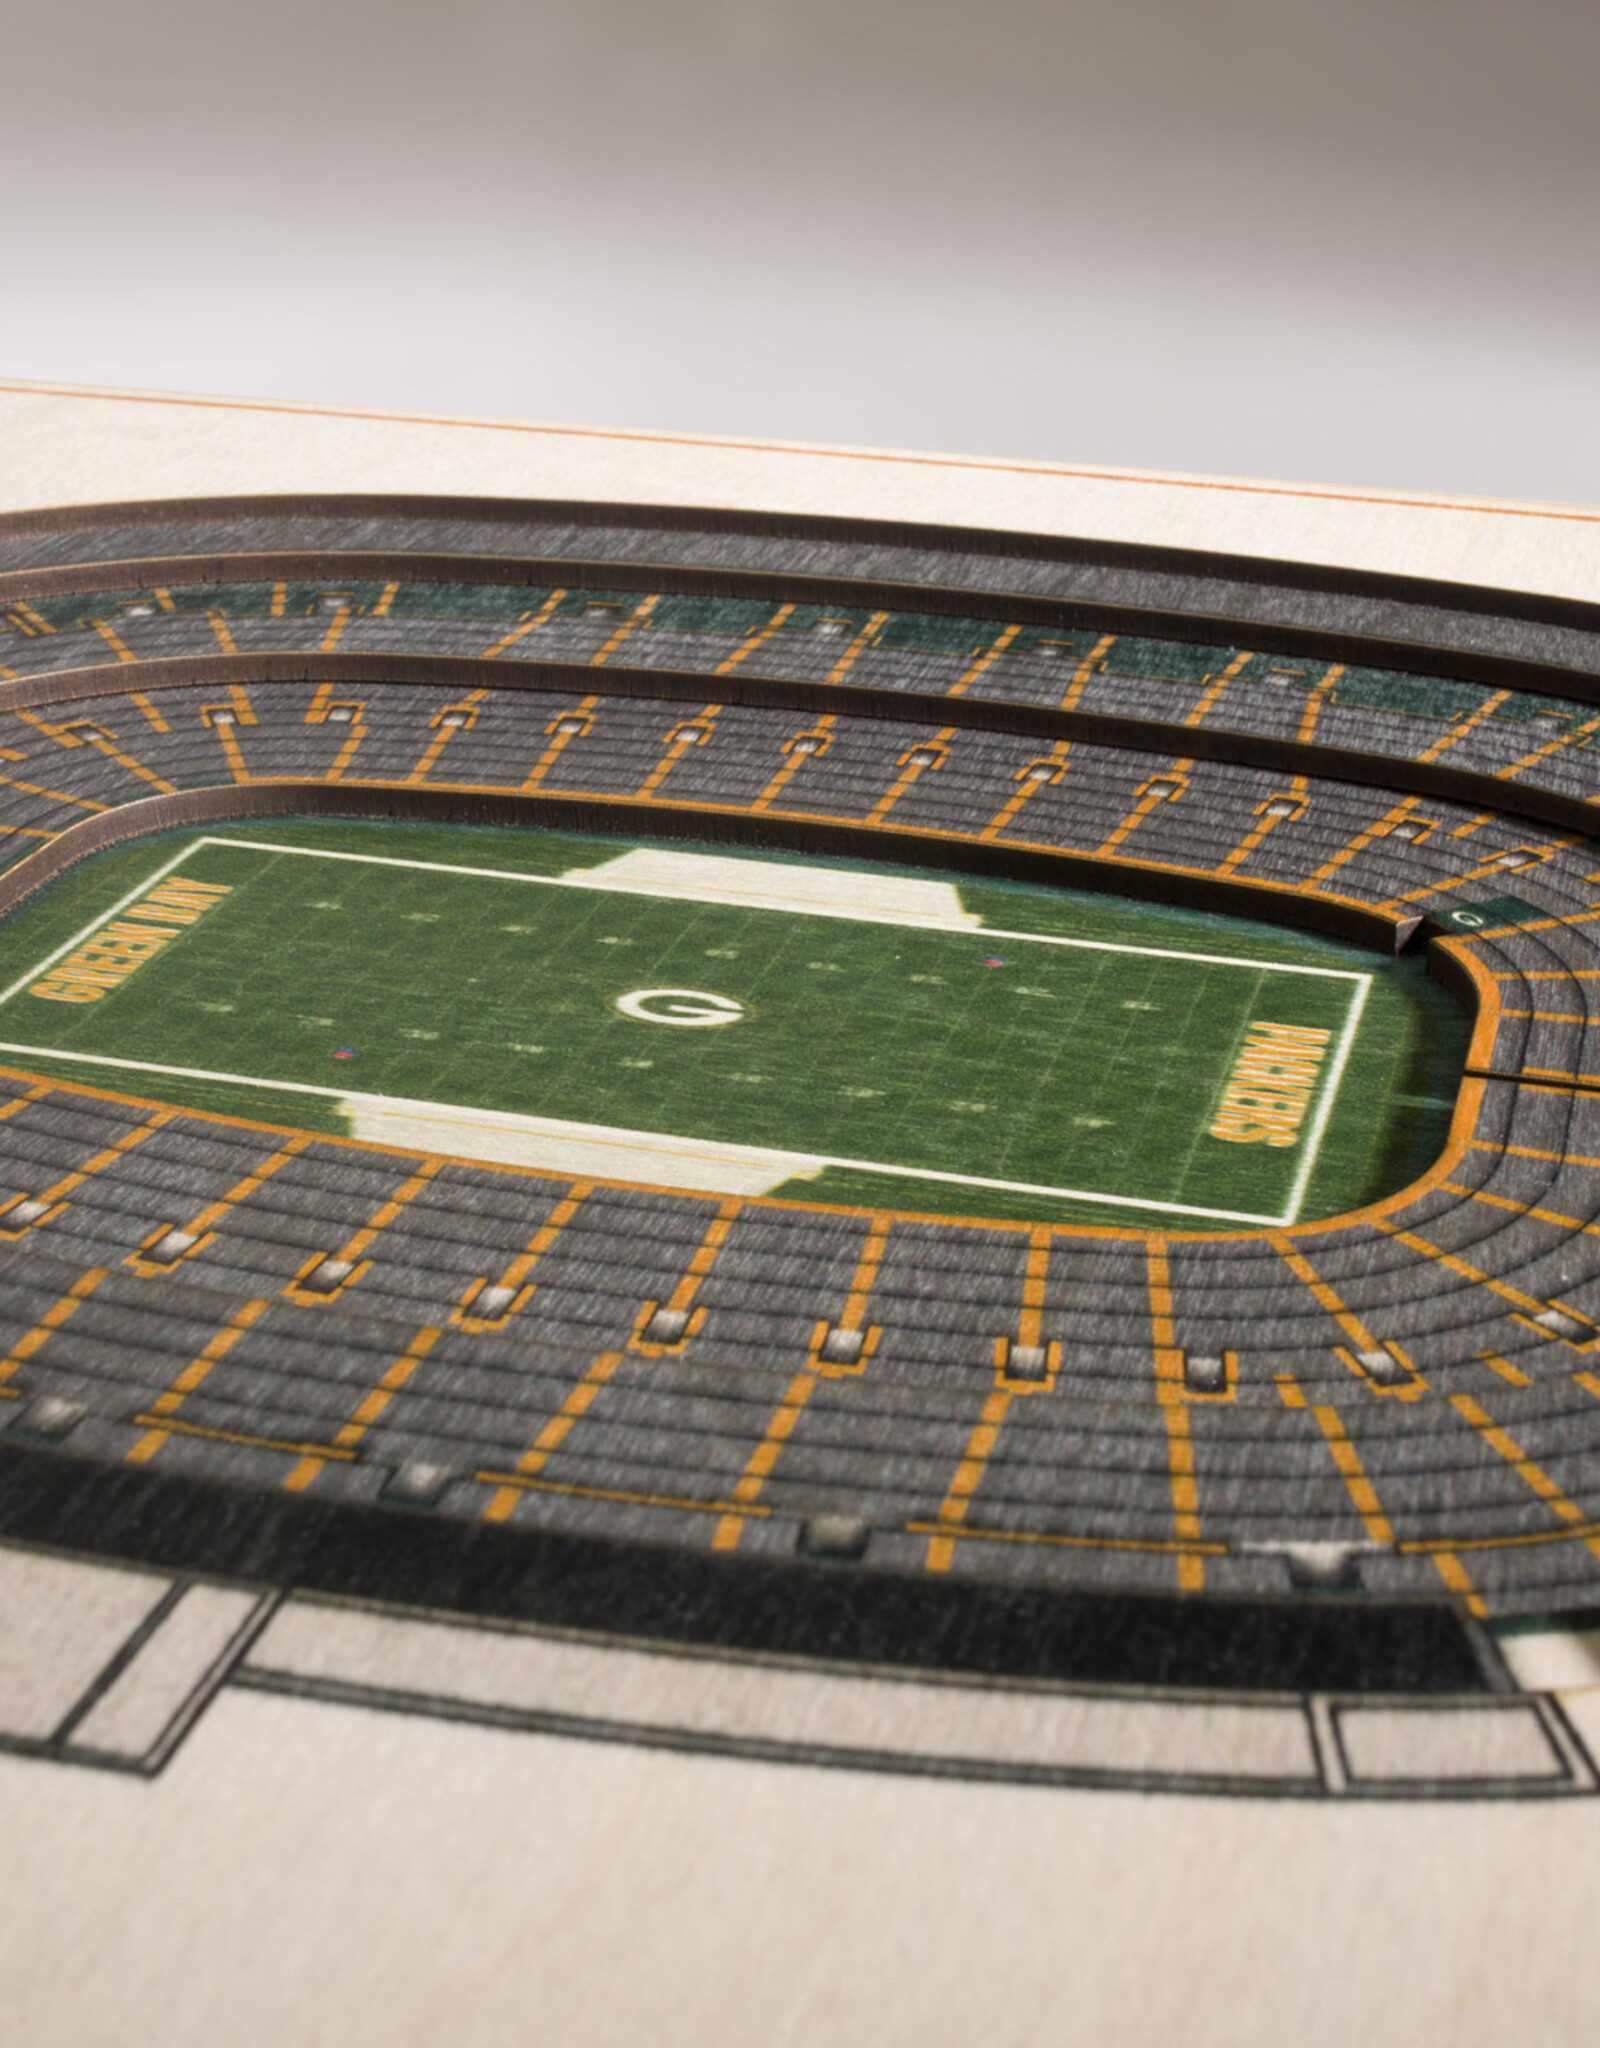 YOU THE FAN Green Bay Packers 5-Layer 3D StadiumView Wall Art